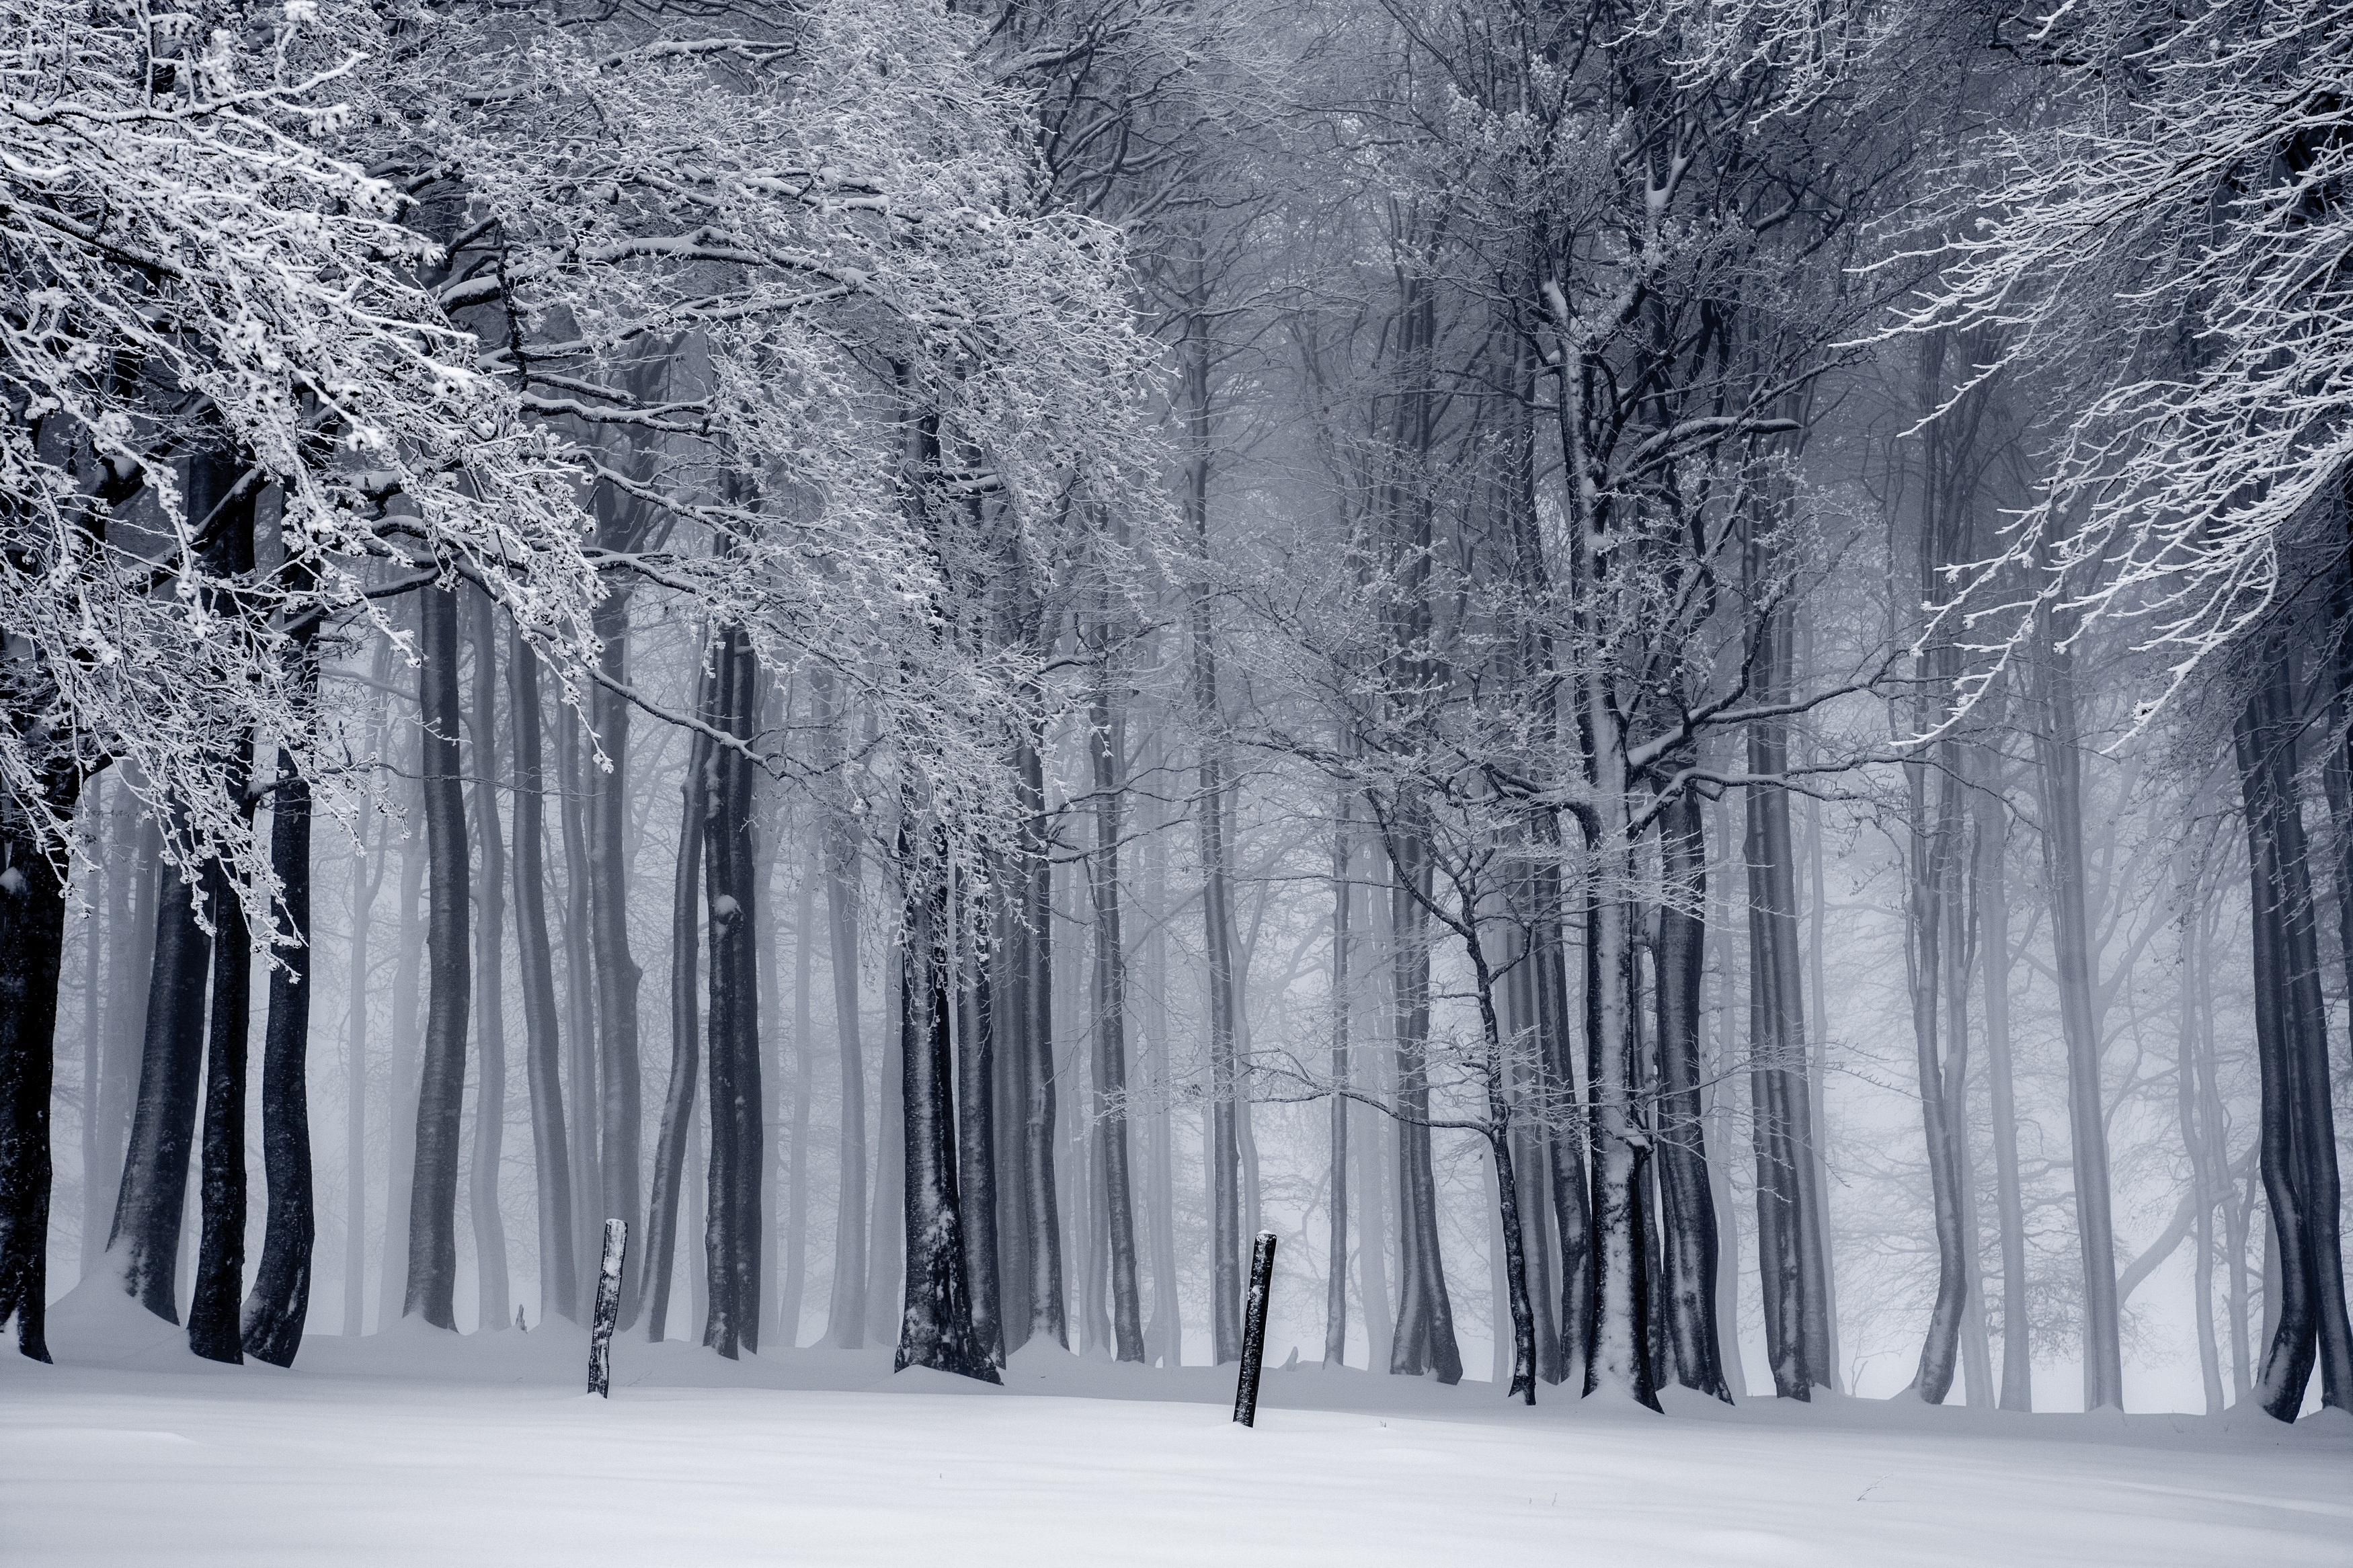 General 3500x2333 trees snow mist monochrome winter